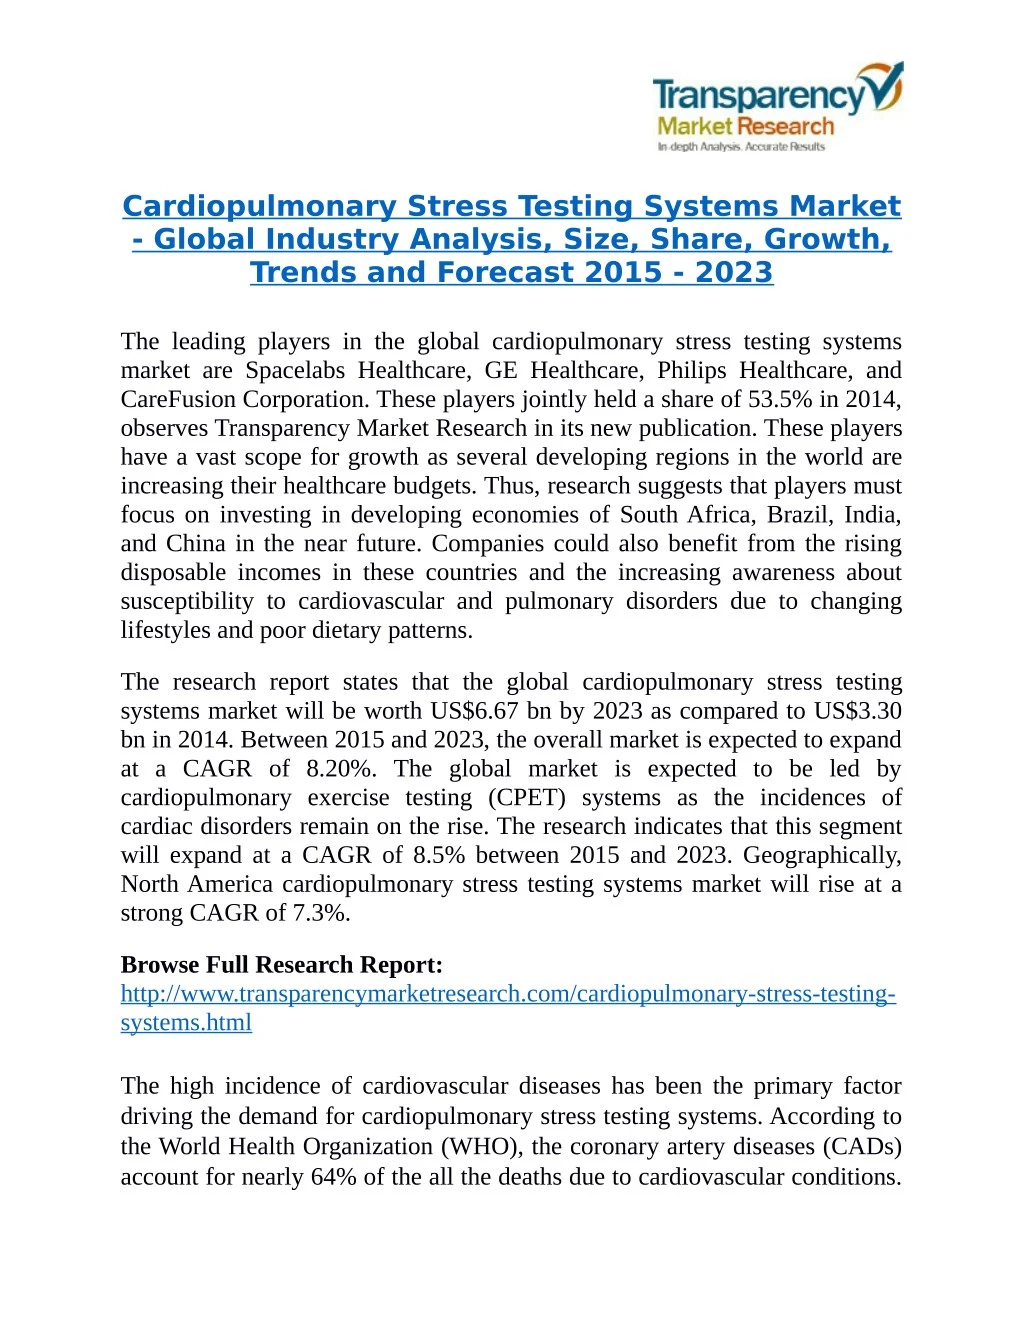 cardiopulmonary stress testing systems market